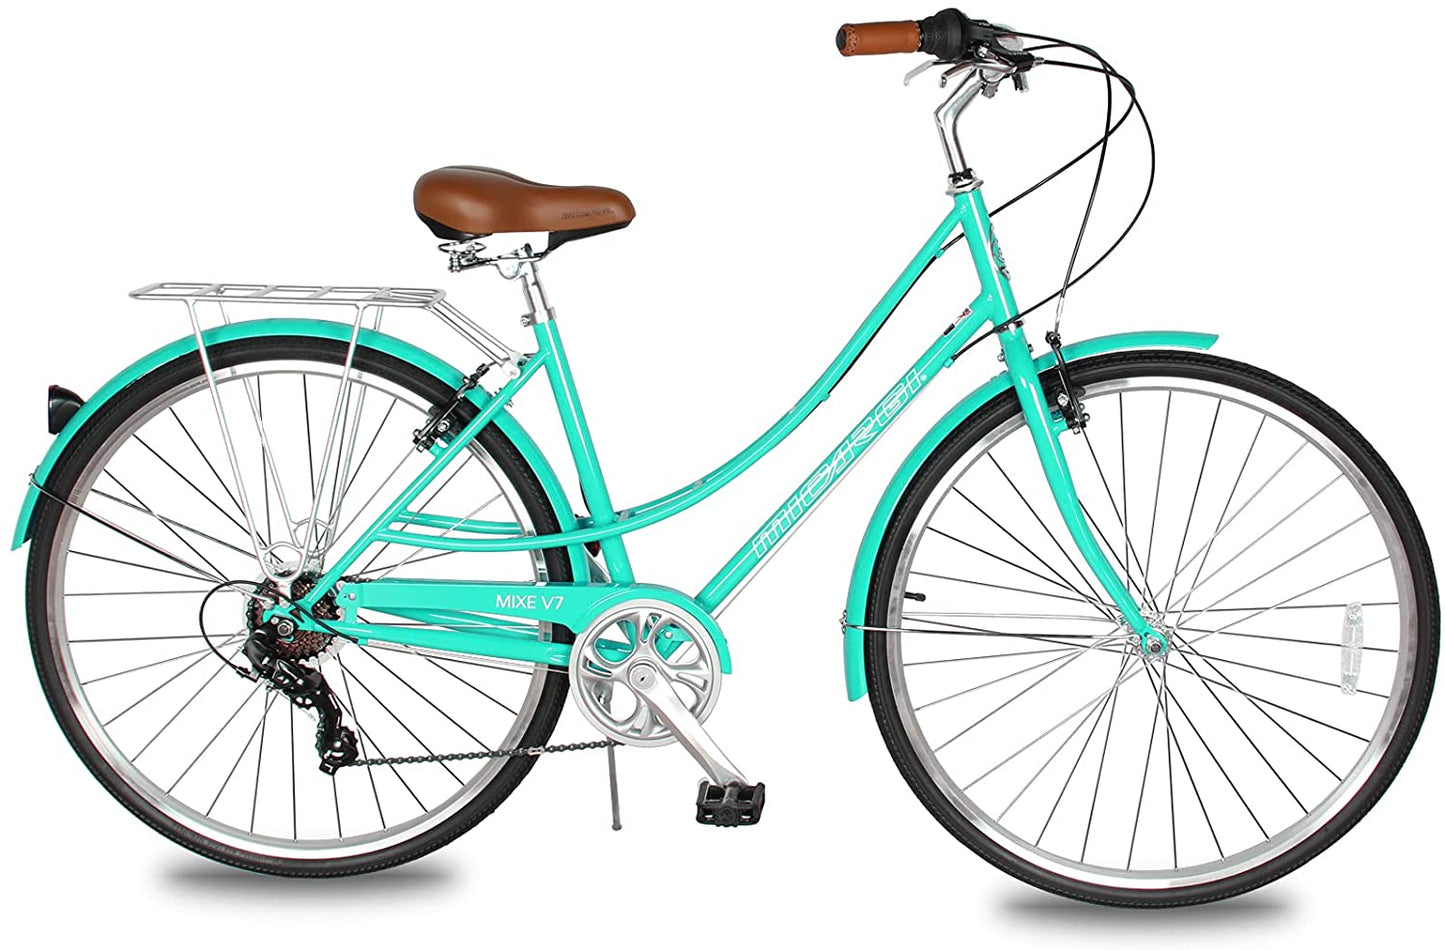 Micargi 700C MIXE V7 Bike | City Bike | Bike Lover USA